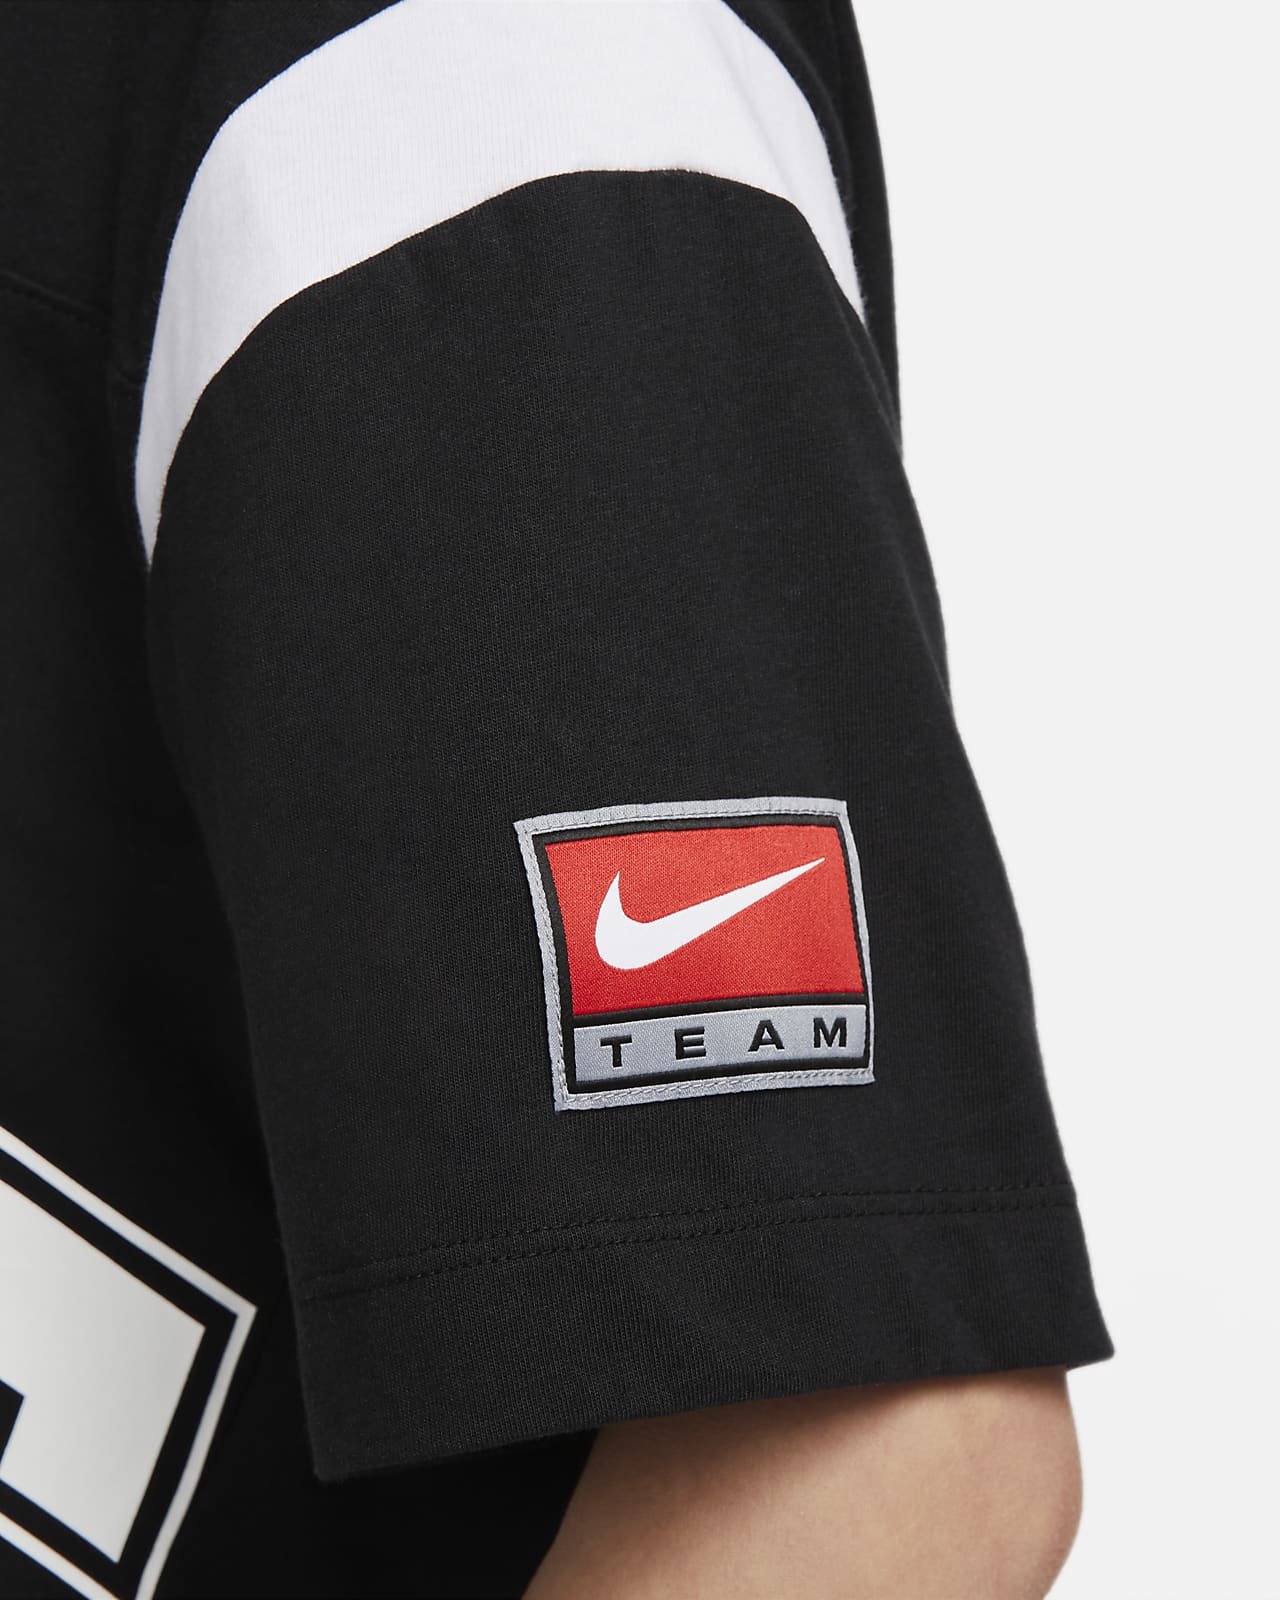 Team Nike Women's Short-Sleeve Top. Nike ID